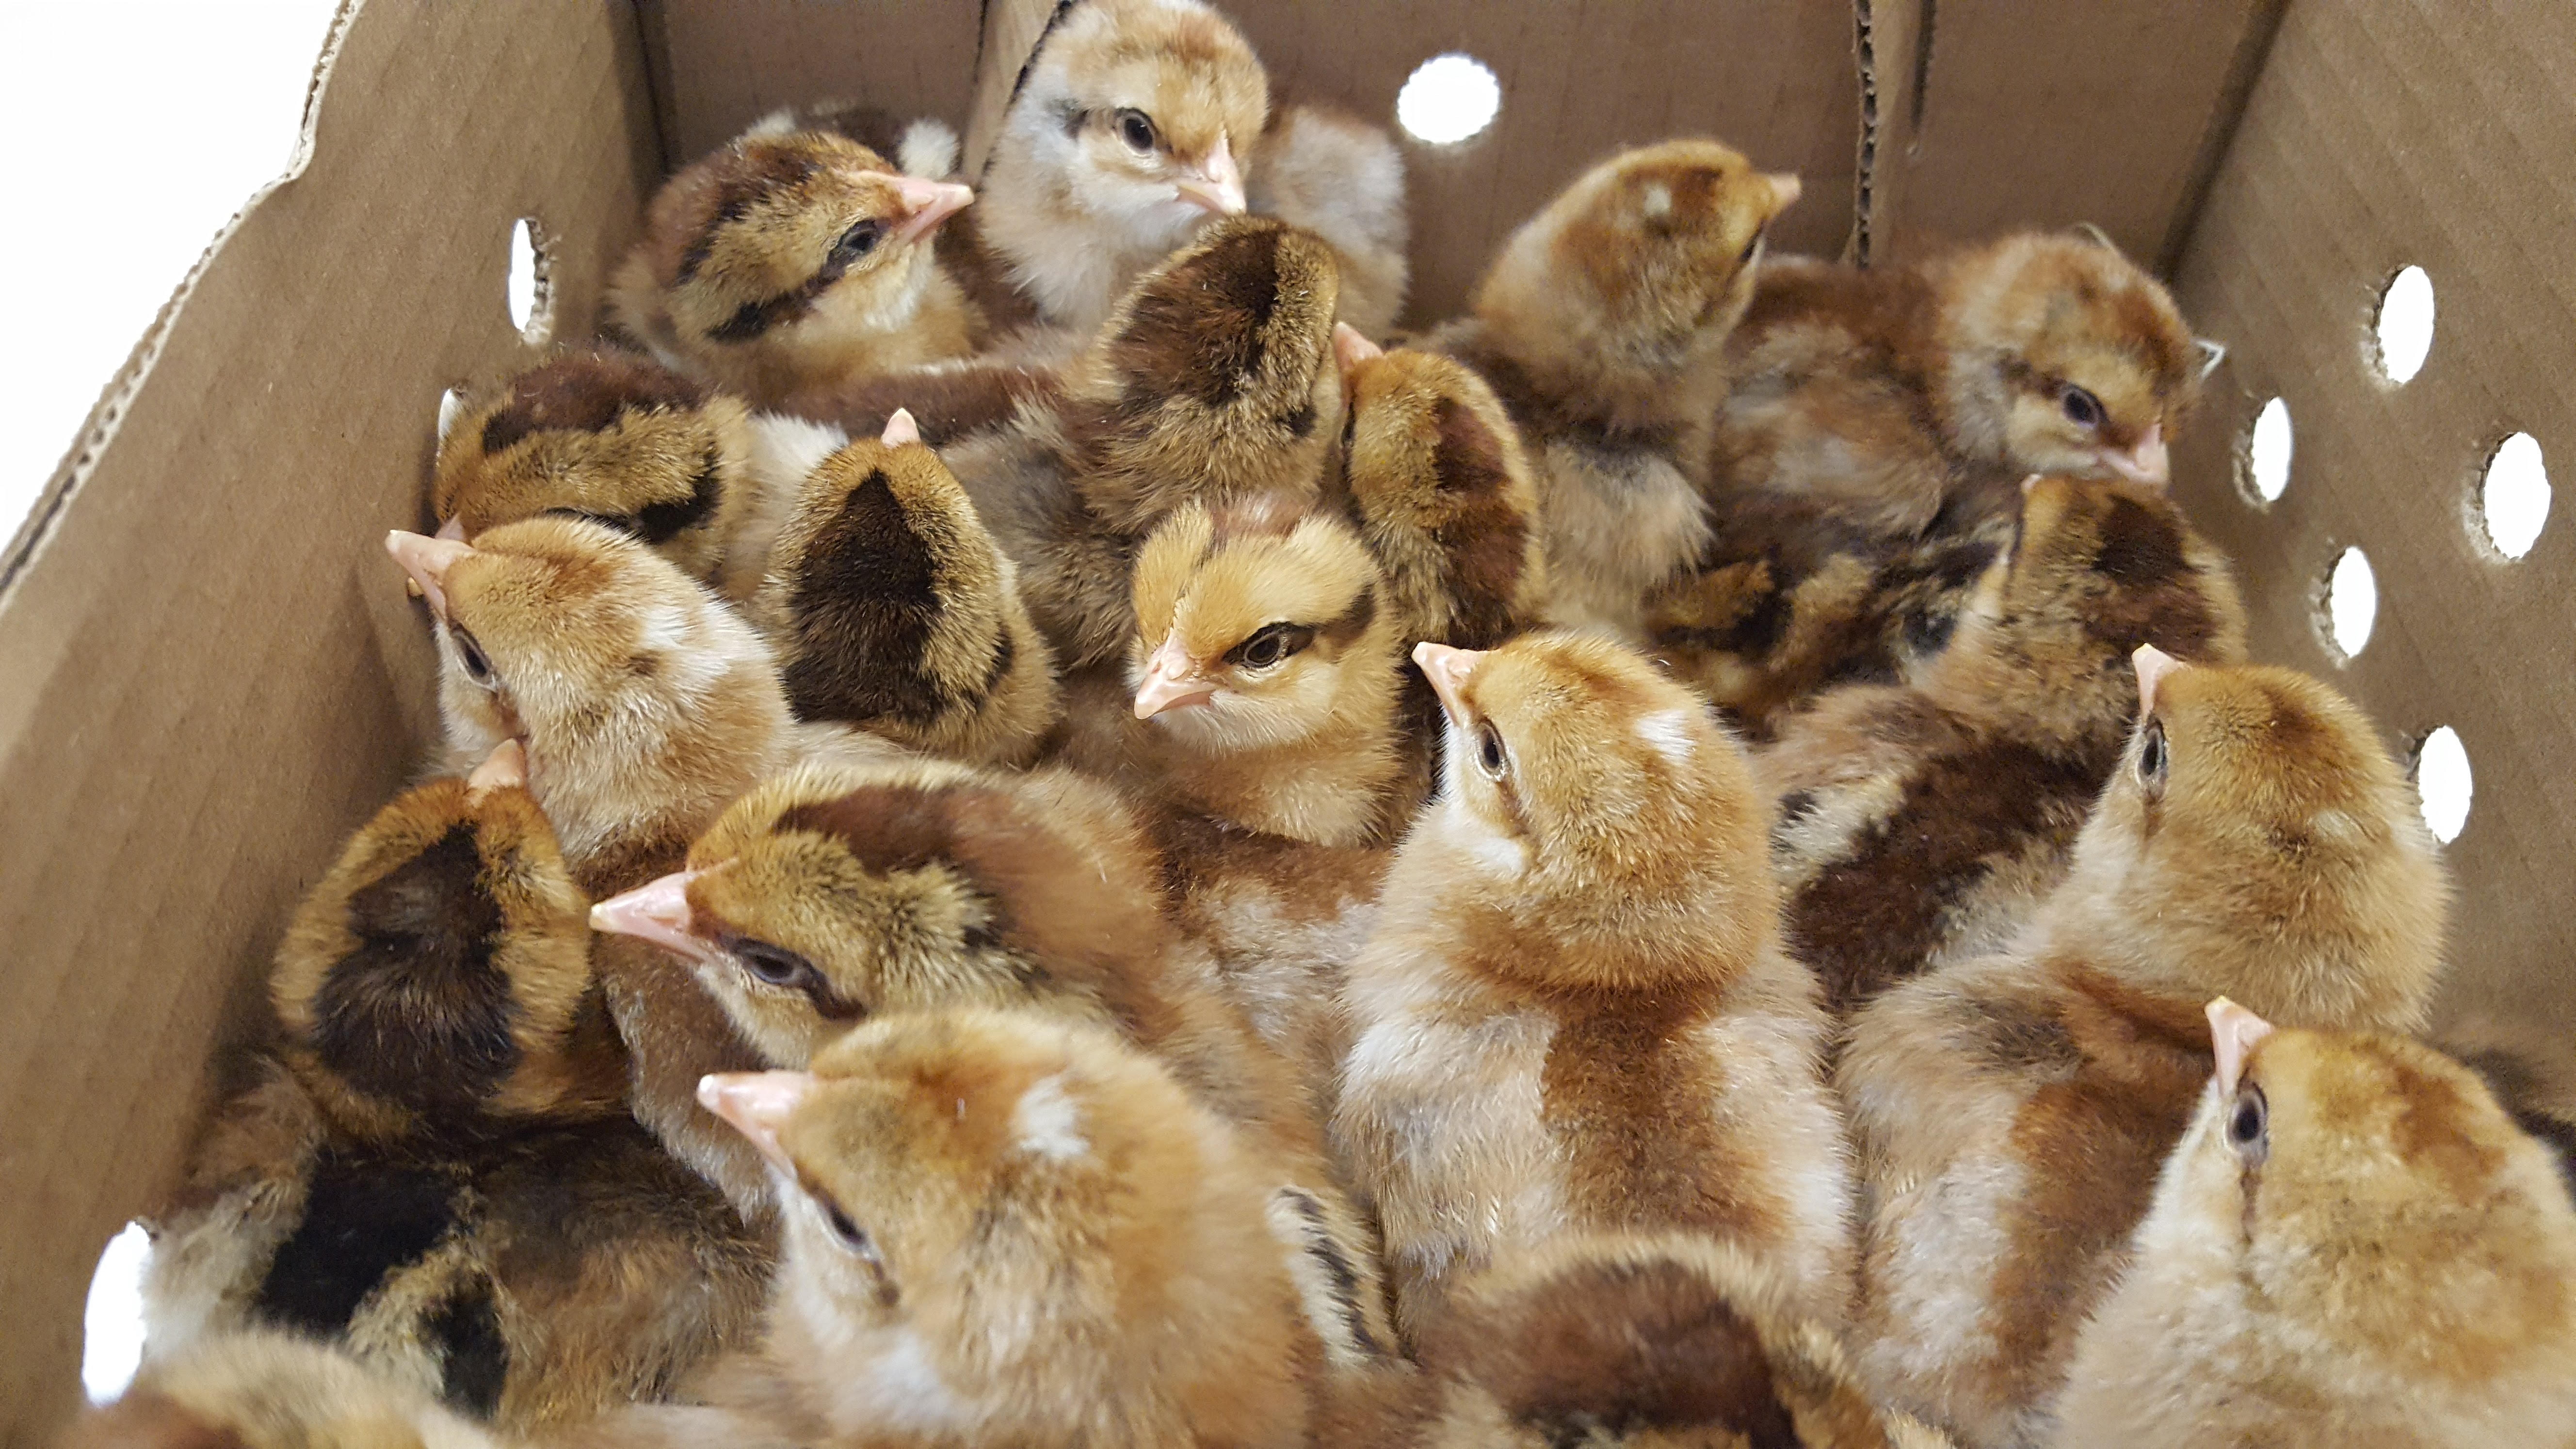 Bielefelder Baby Chicks - Chickens For Sale | Cackle Hatchery